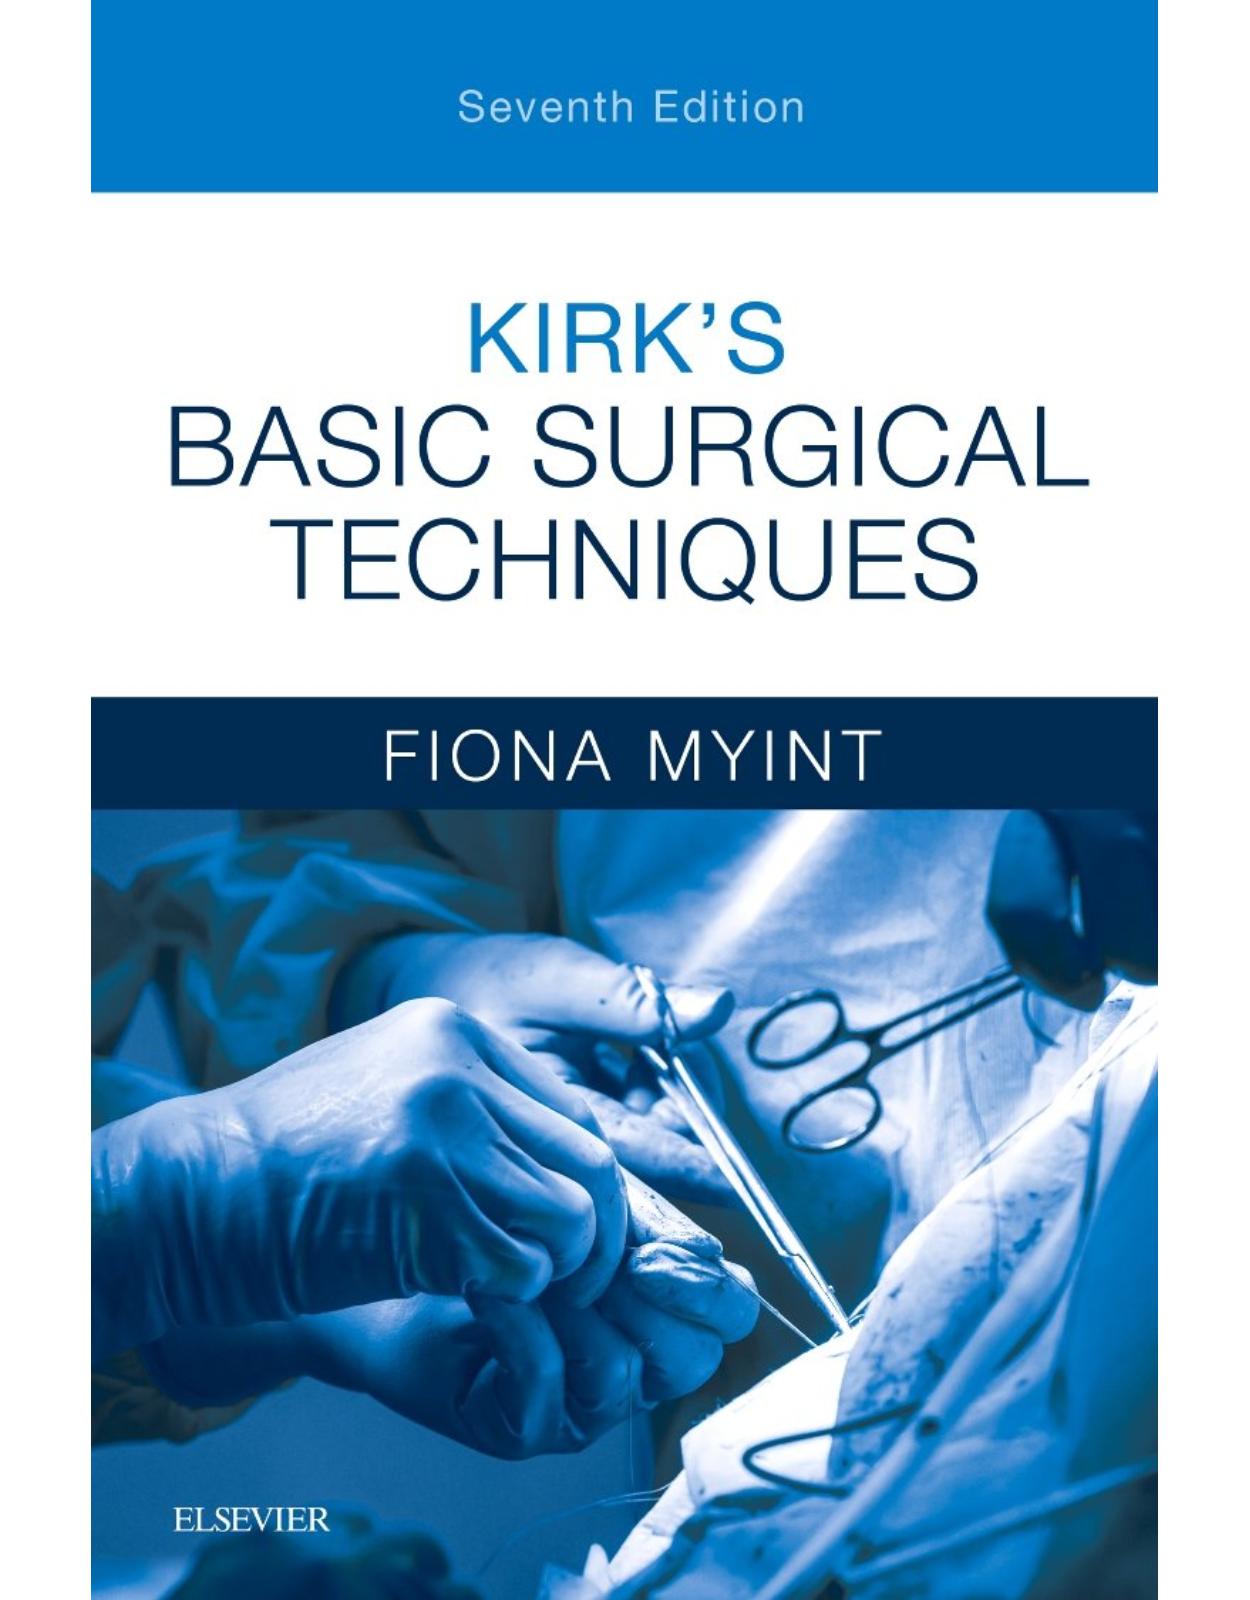 Kirk's Basic Surgical Techniques, 7e